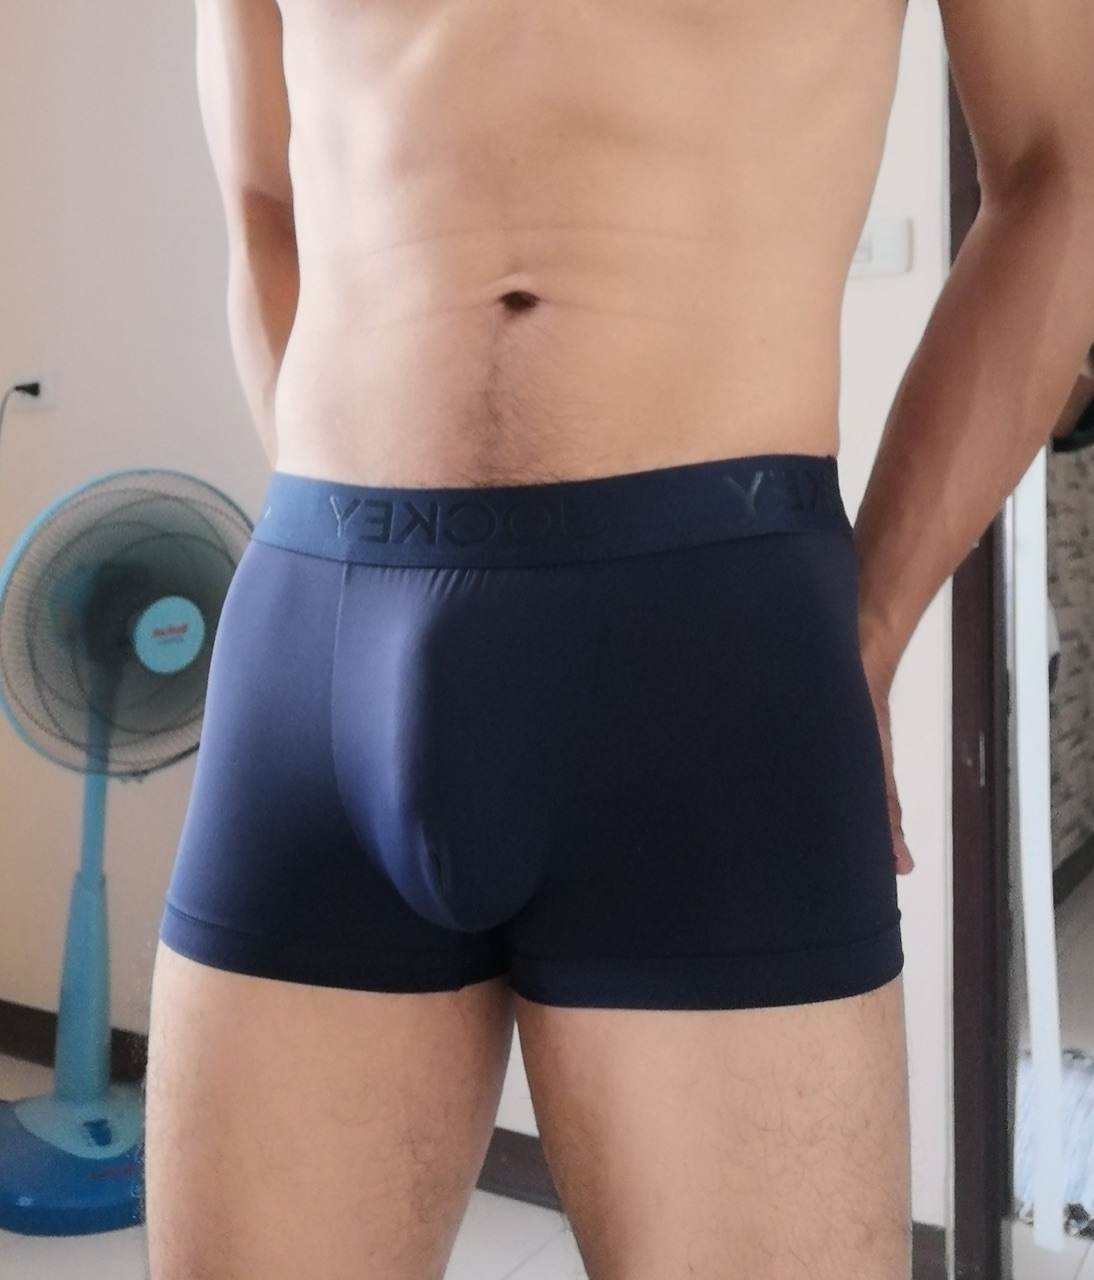 Hot men in underwear 513